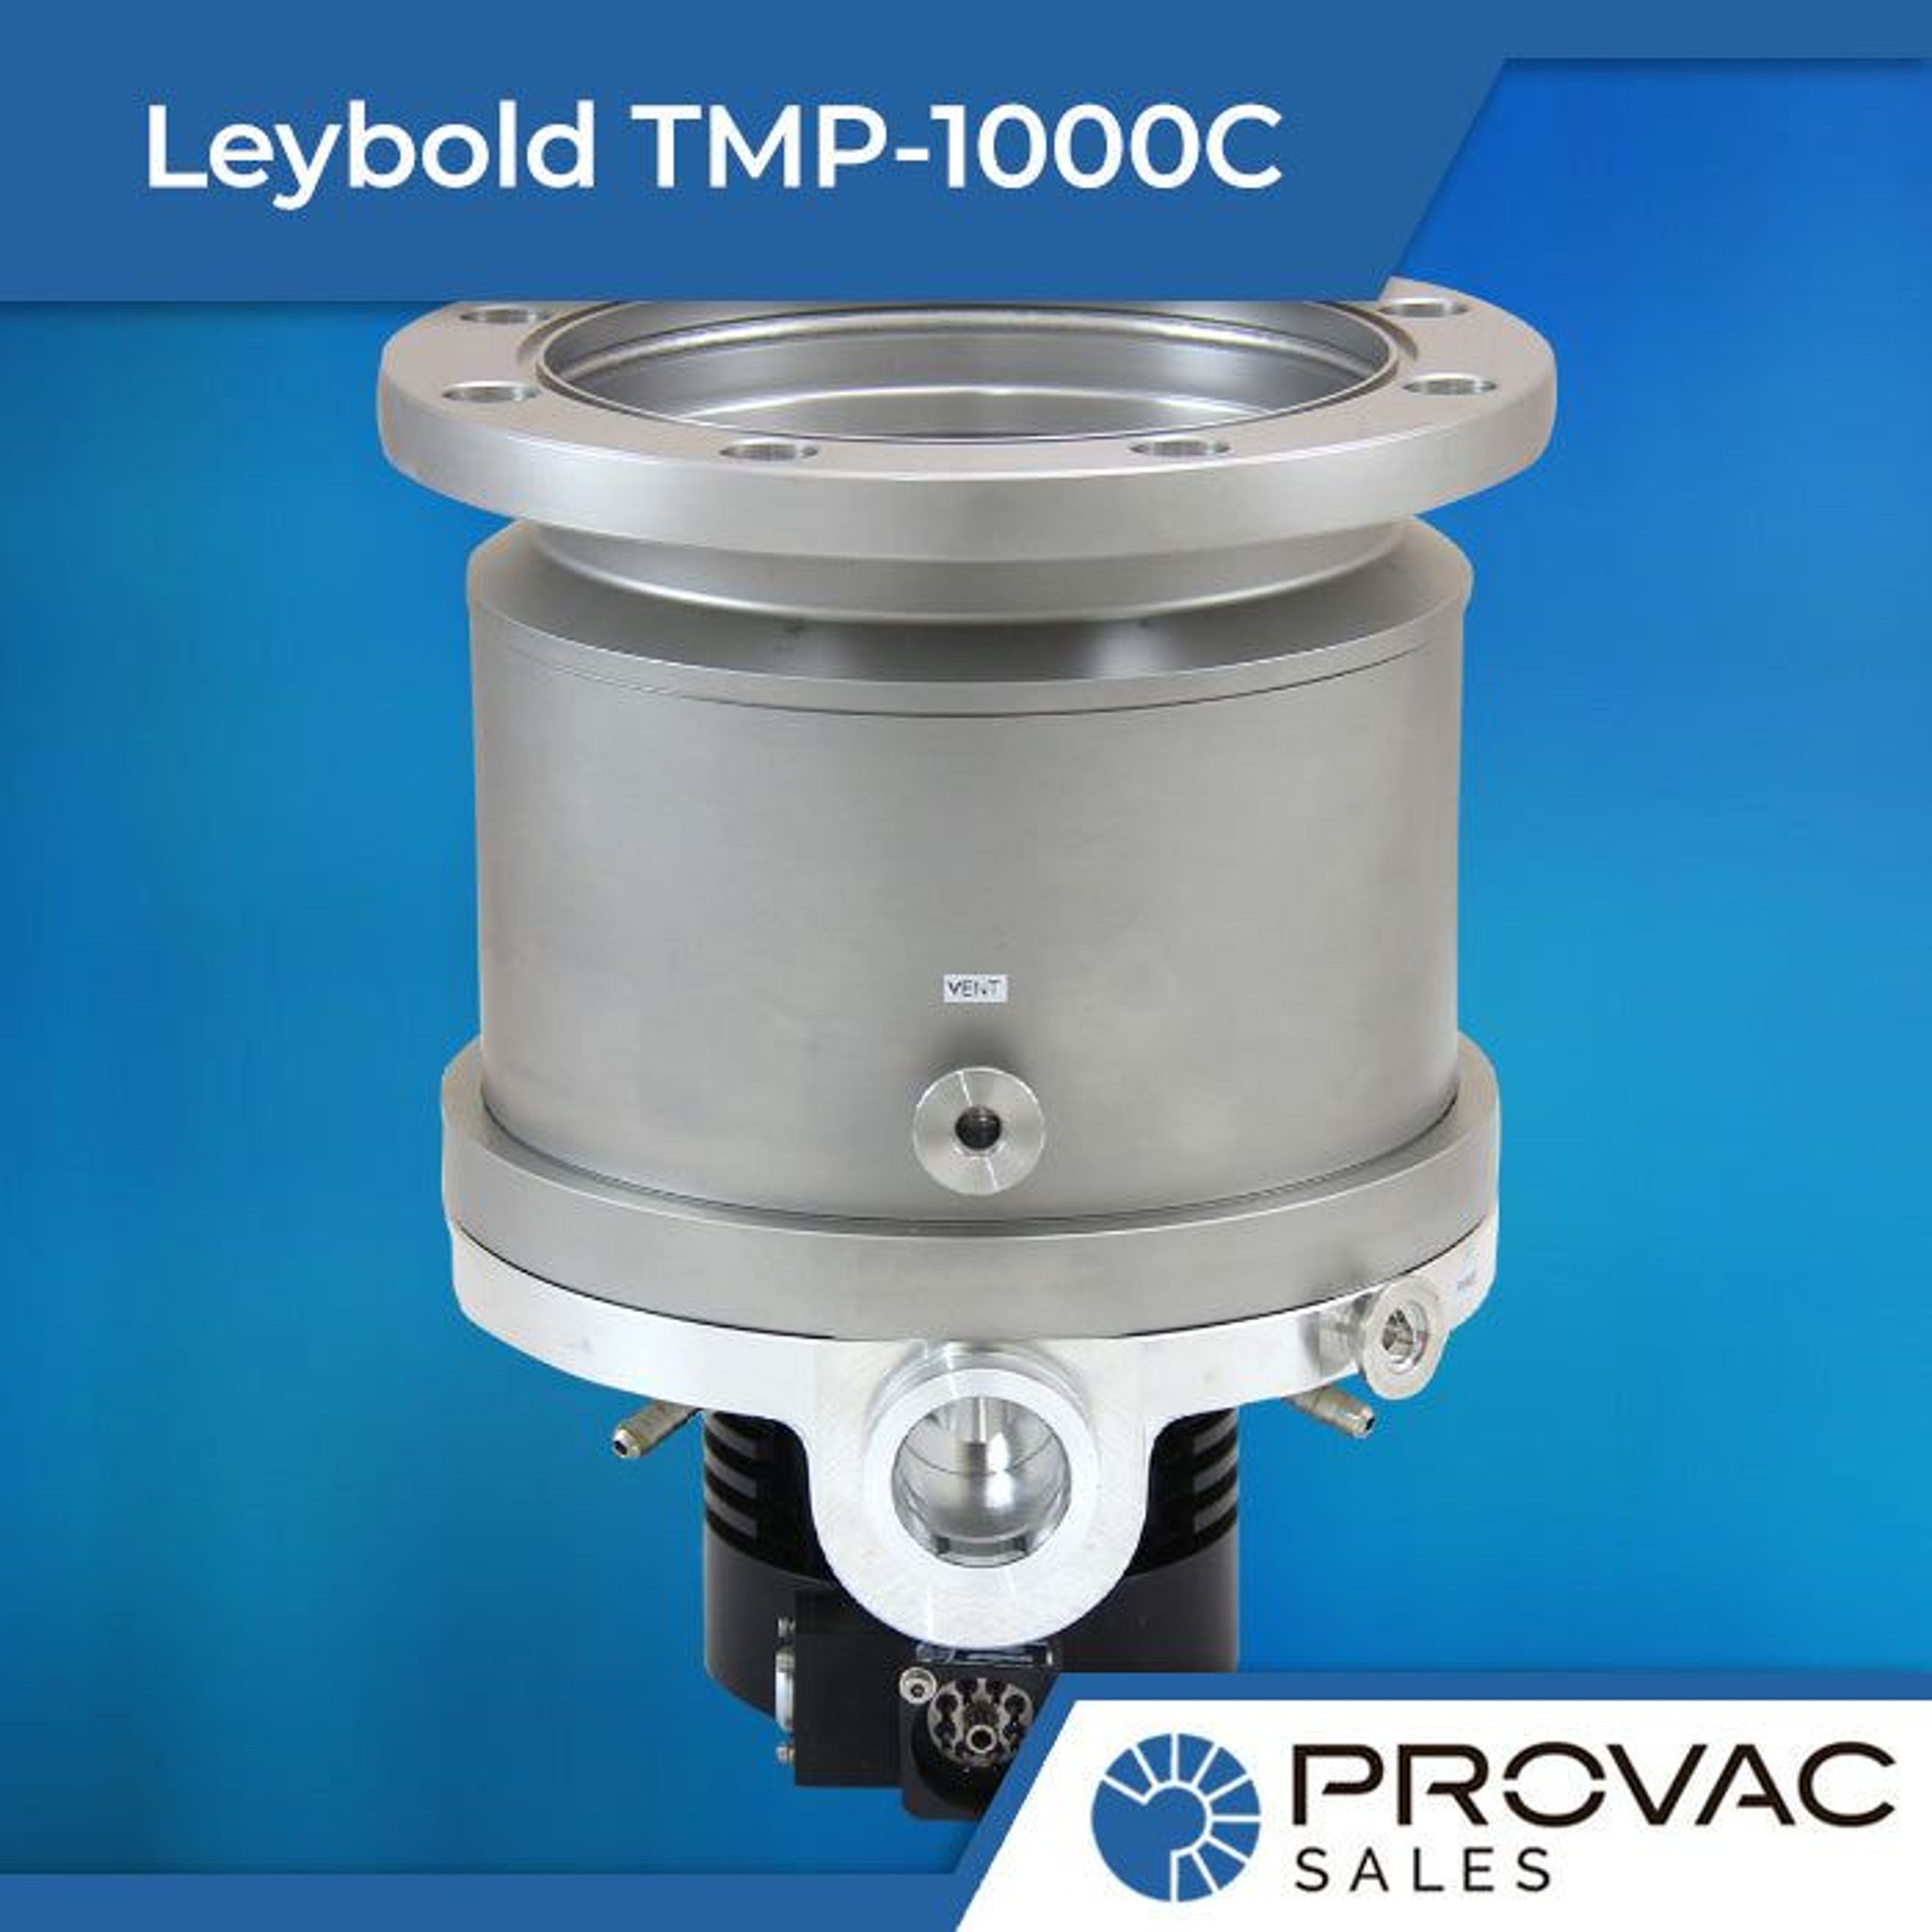 Leybold TMP-1000C Turbomolecular Pump Background